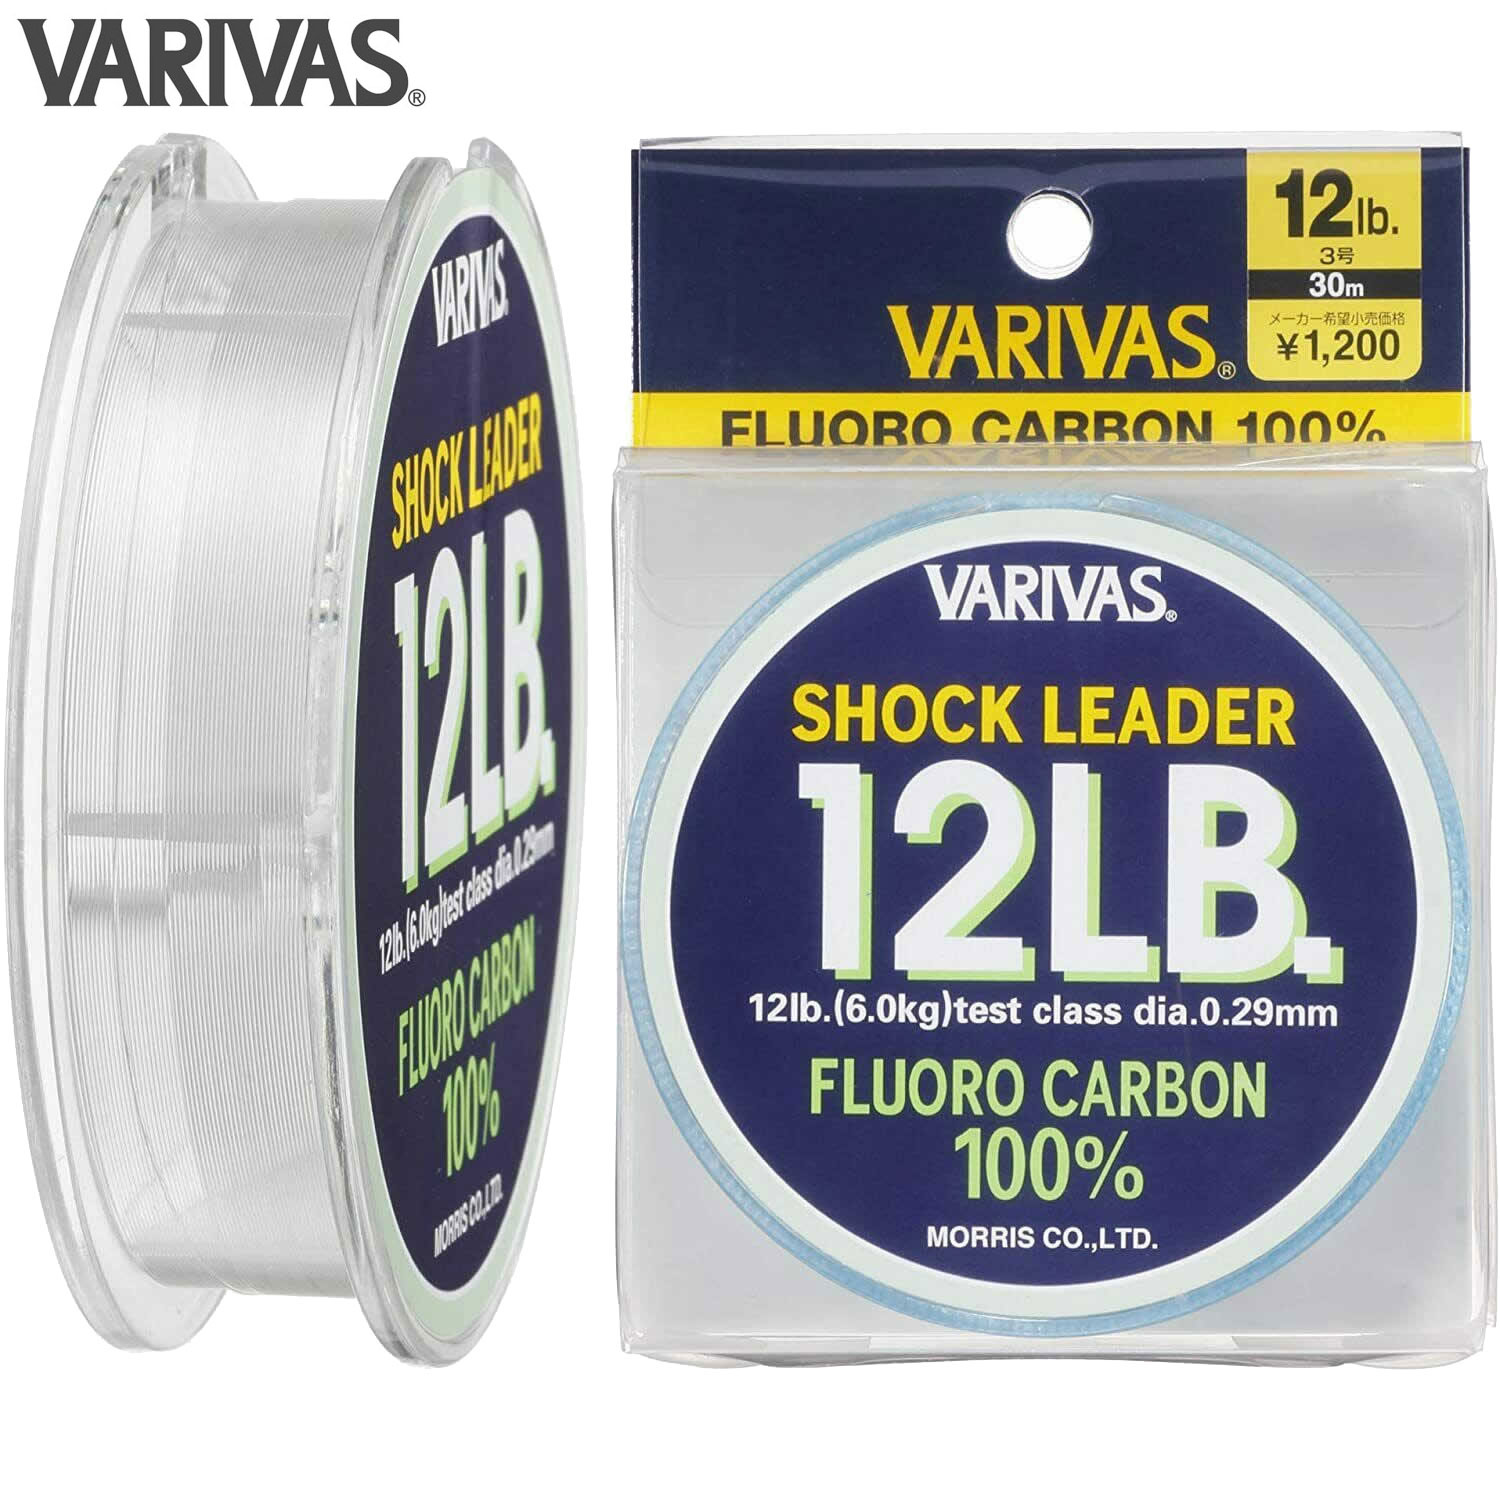 Varivas Shock Leader Fluorocarbon 100%